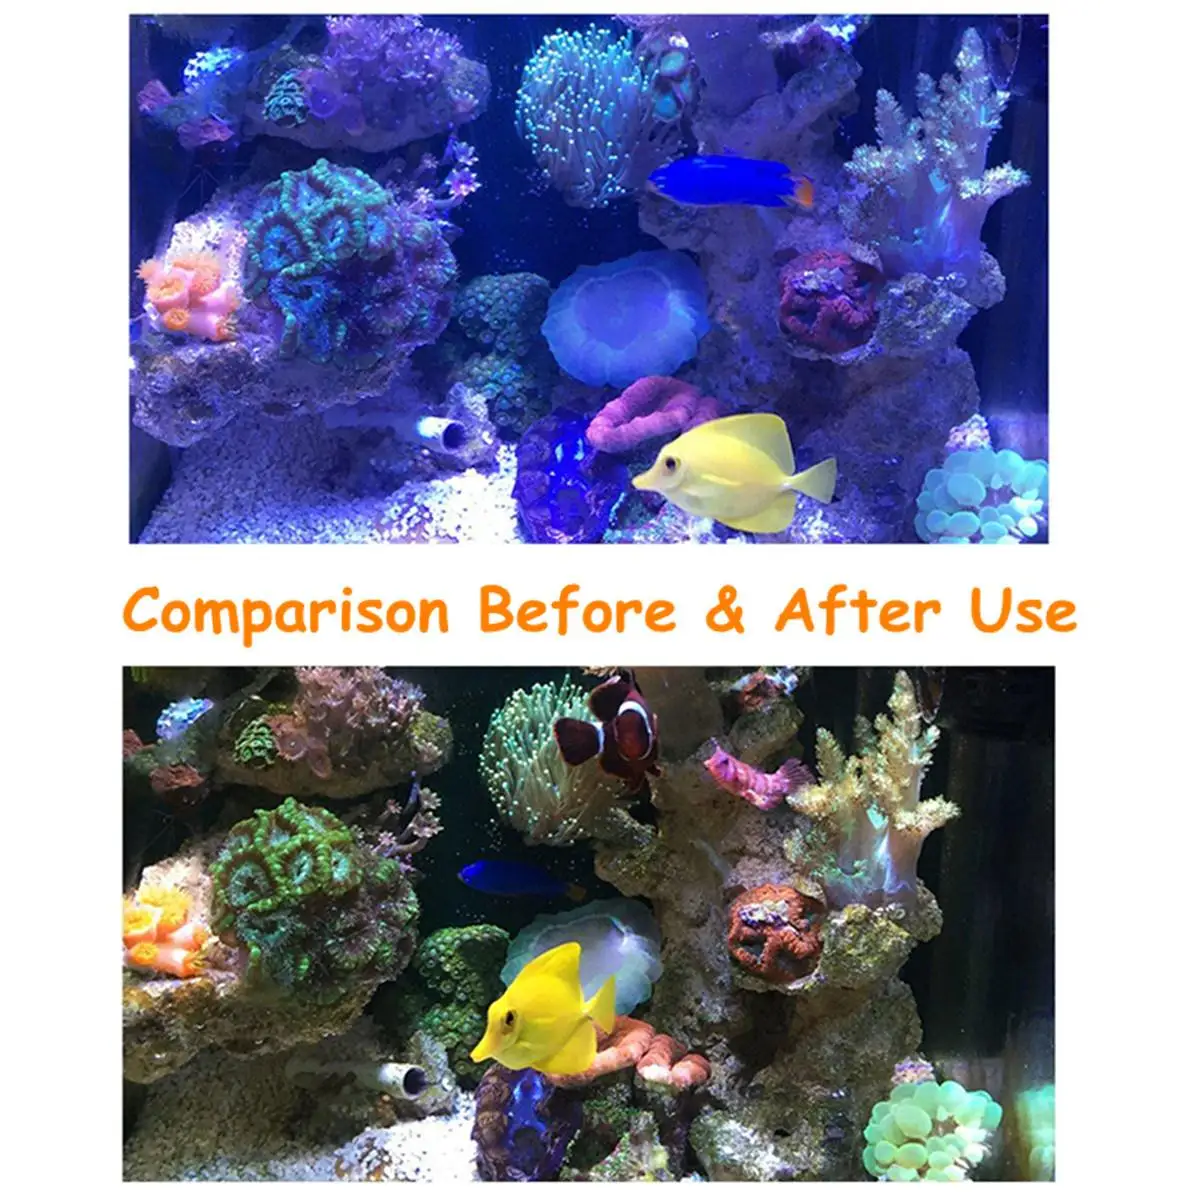 aquarium fish tank coral reef lens phone camera filters lens 1 macro lens fish aquatic terrarium accessories free global shipping